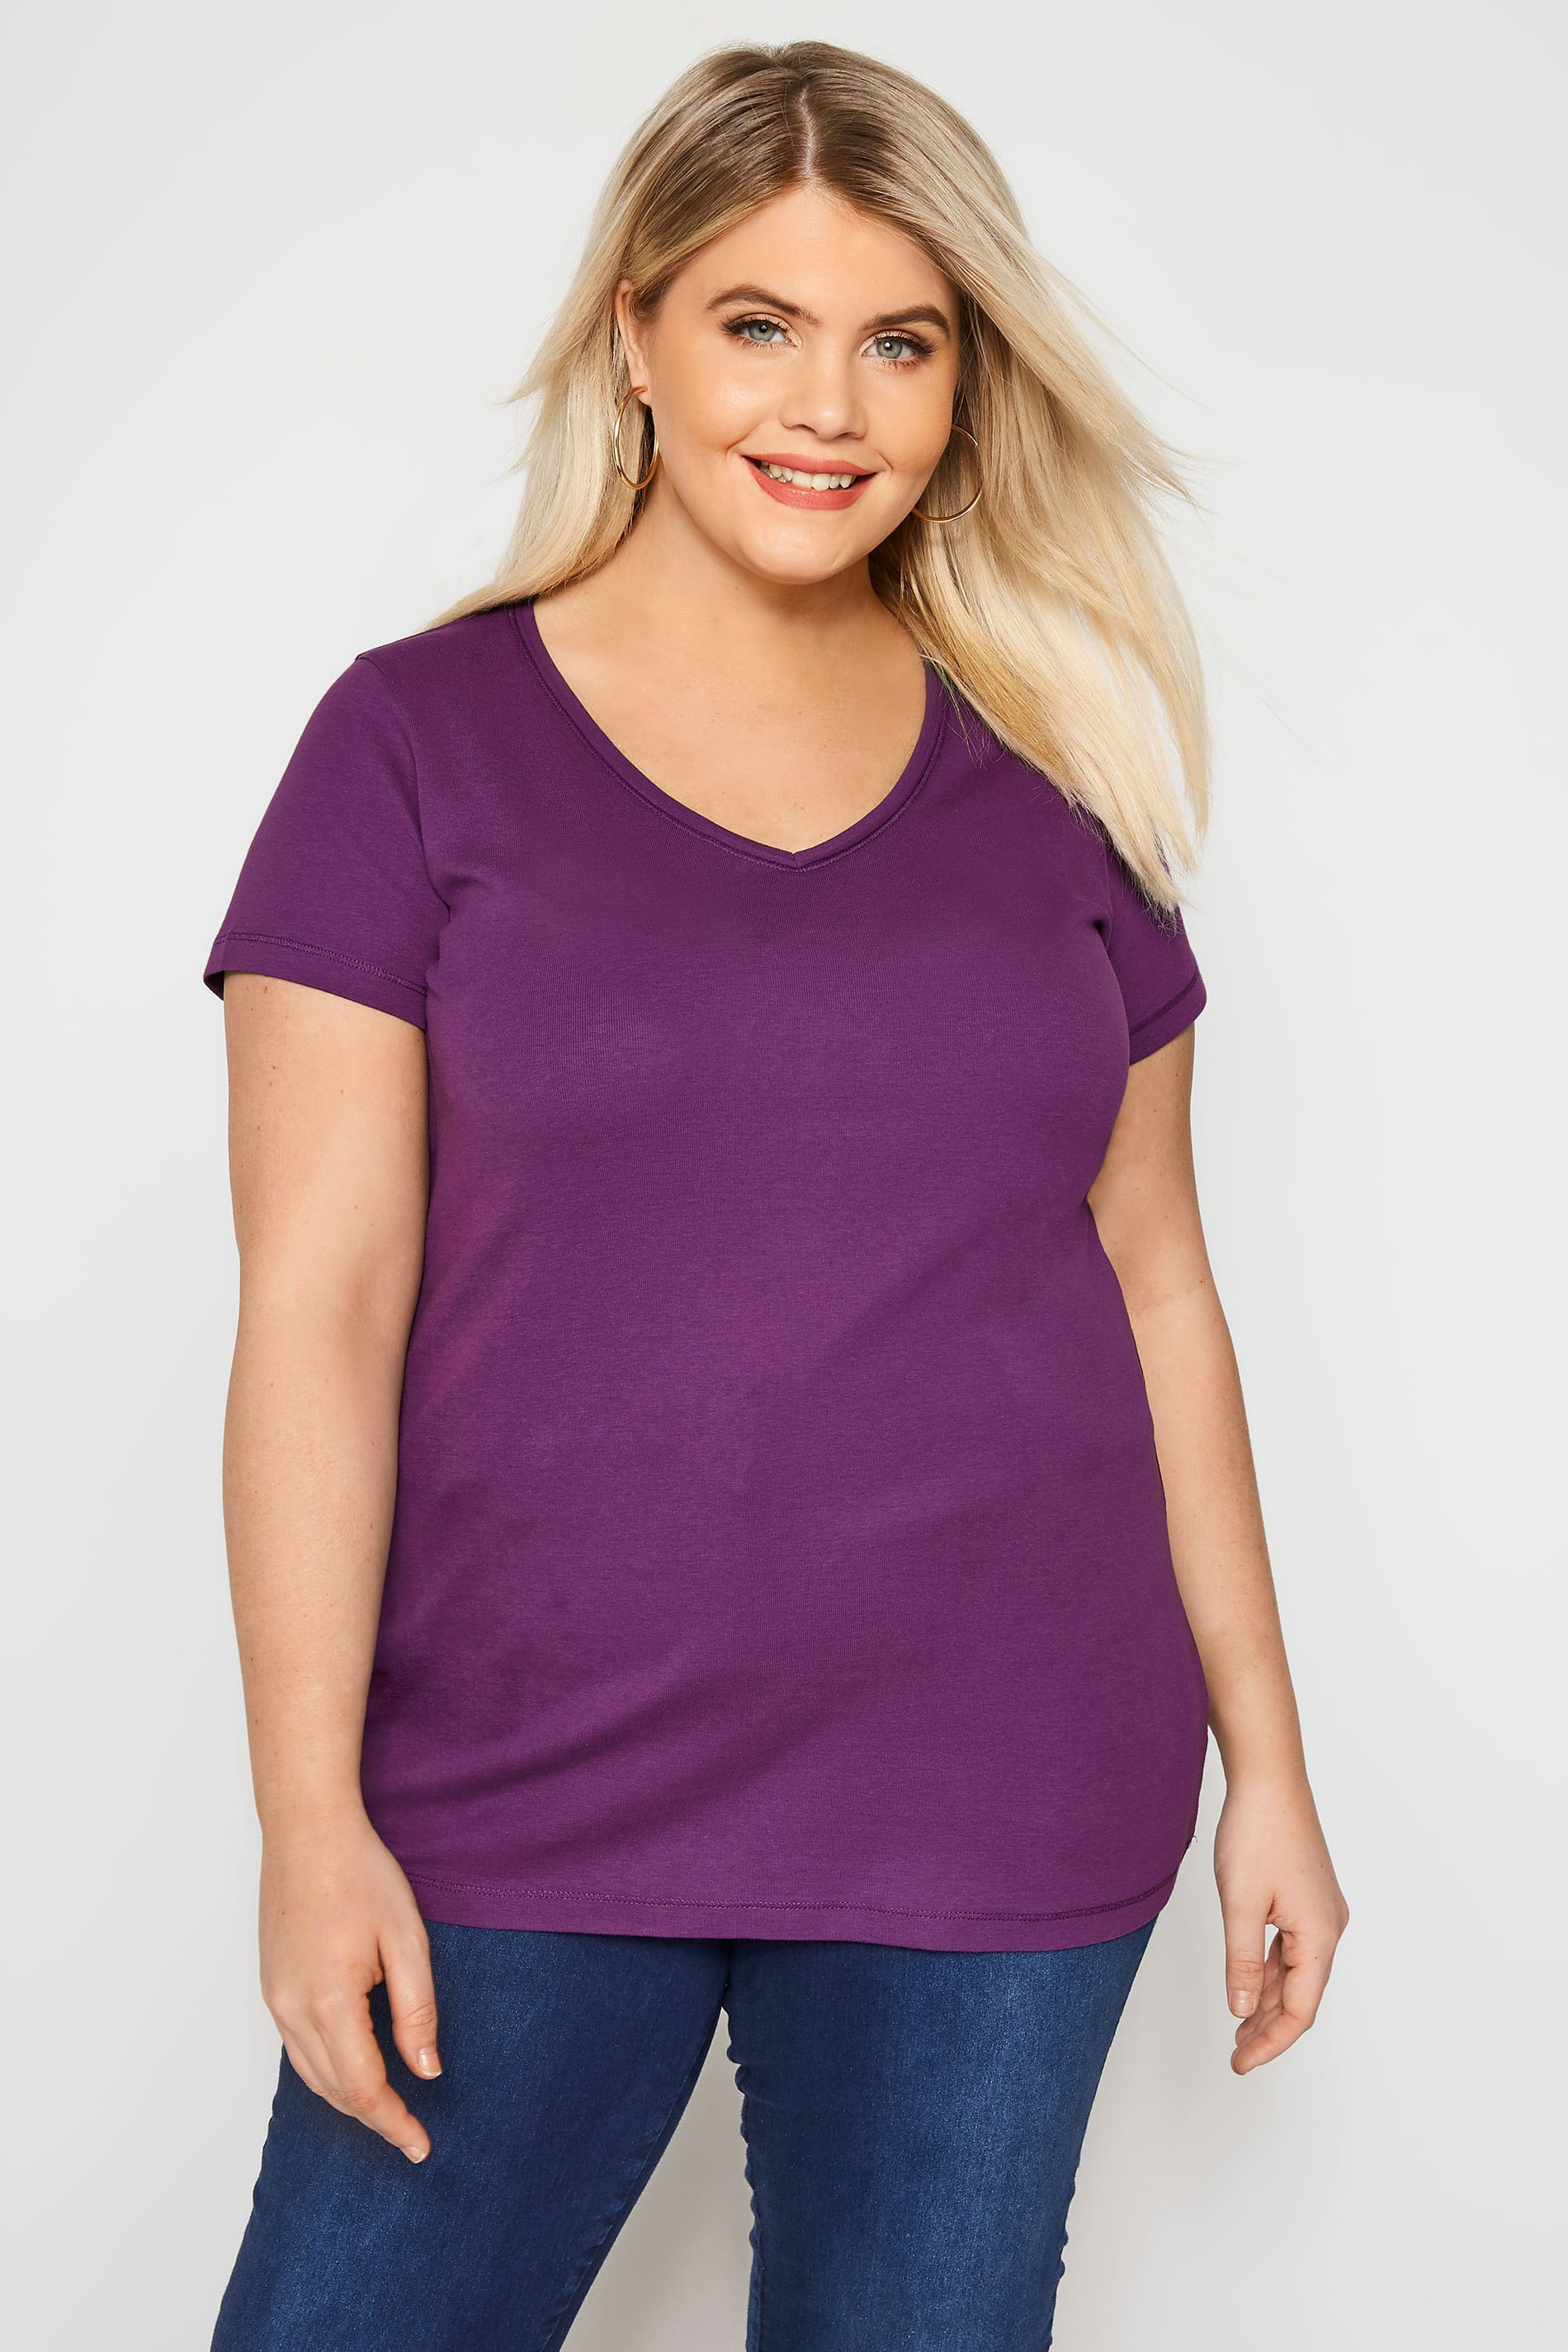 Purple V Neck T Shirt Plus Sizes 16 To 36 Yours Clothing Free